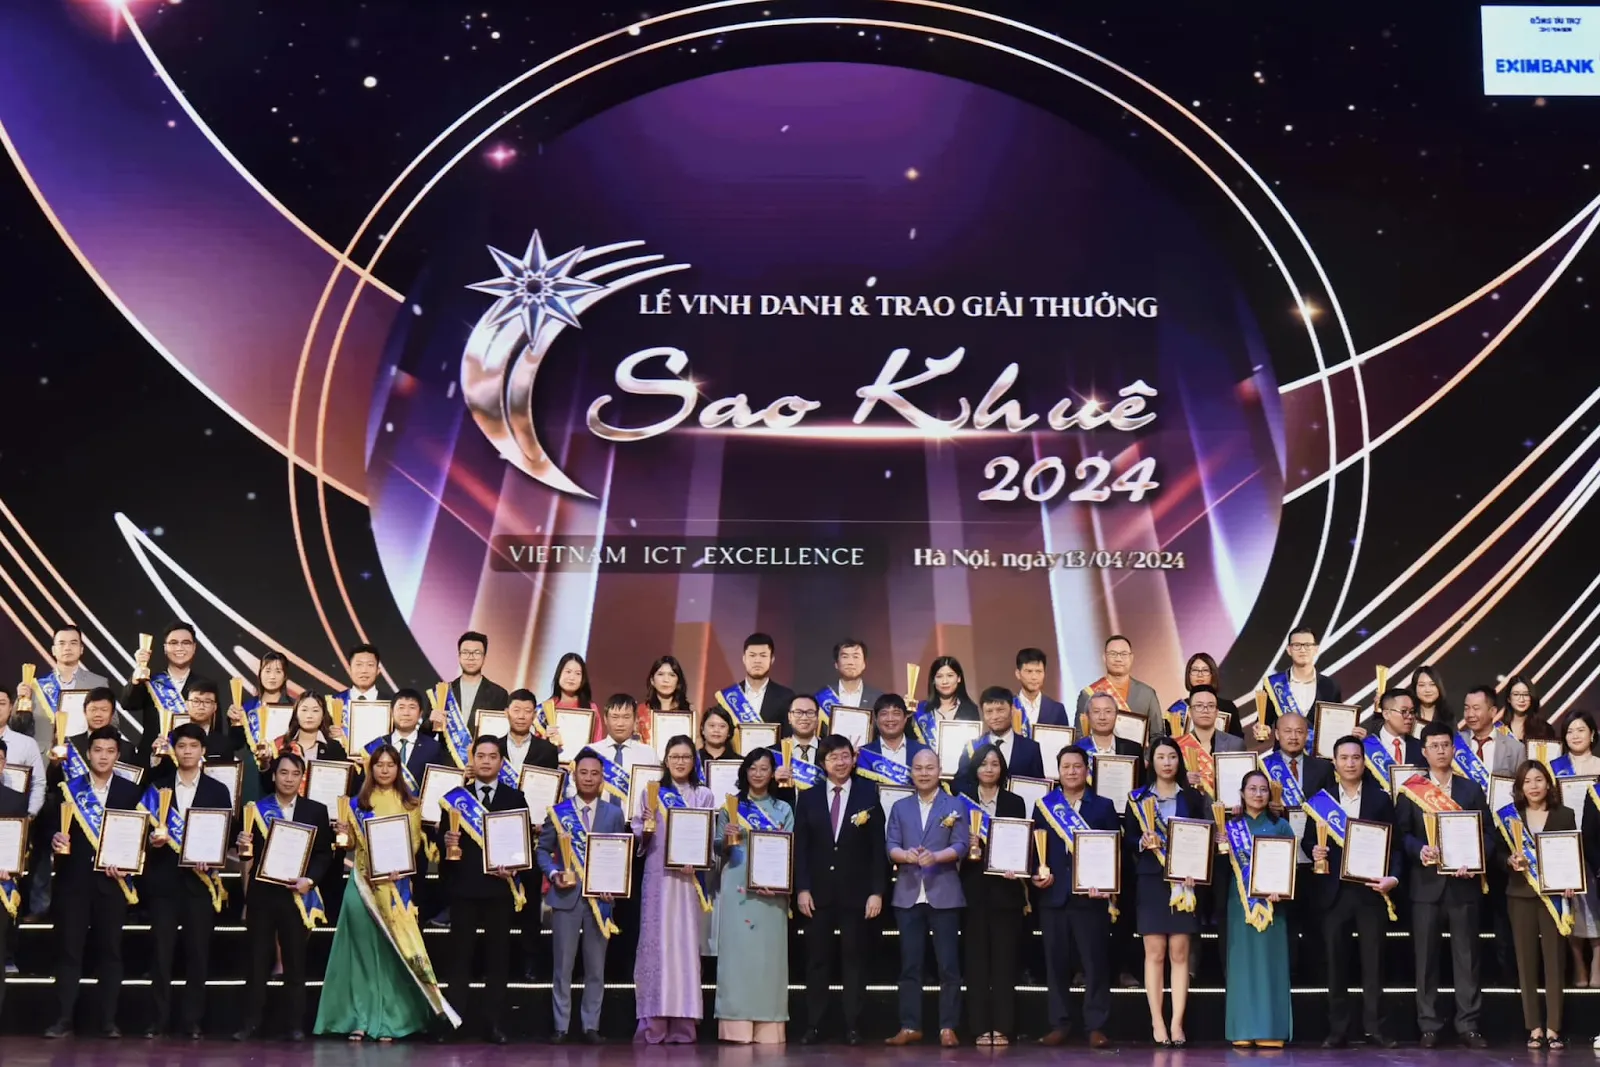 Viindoo (center) is honored at Sao Khue Awards 2024